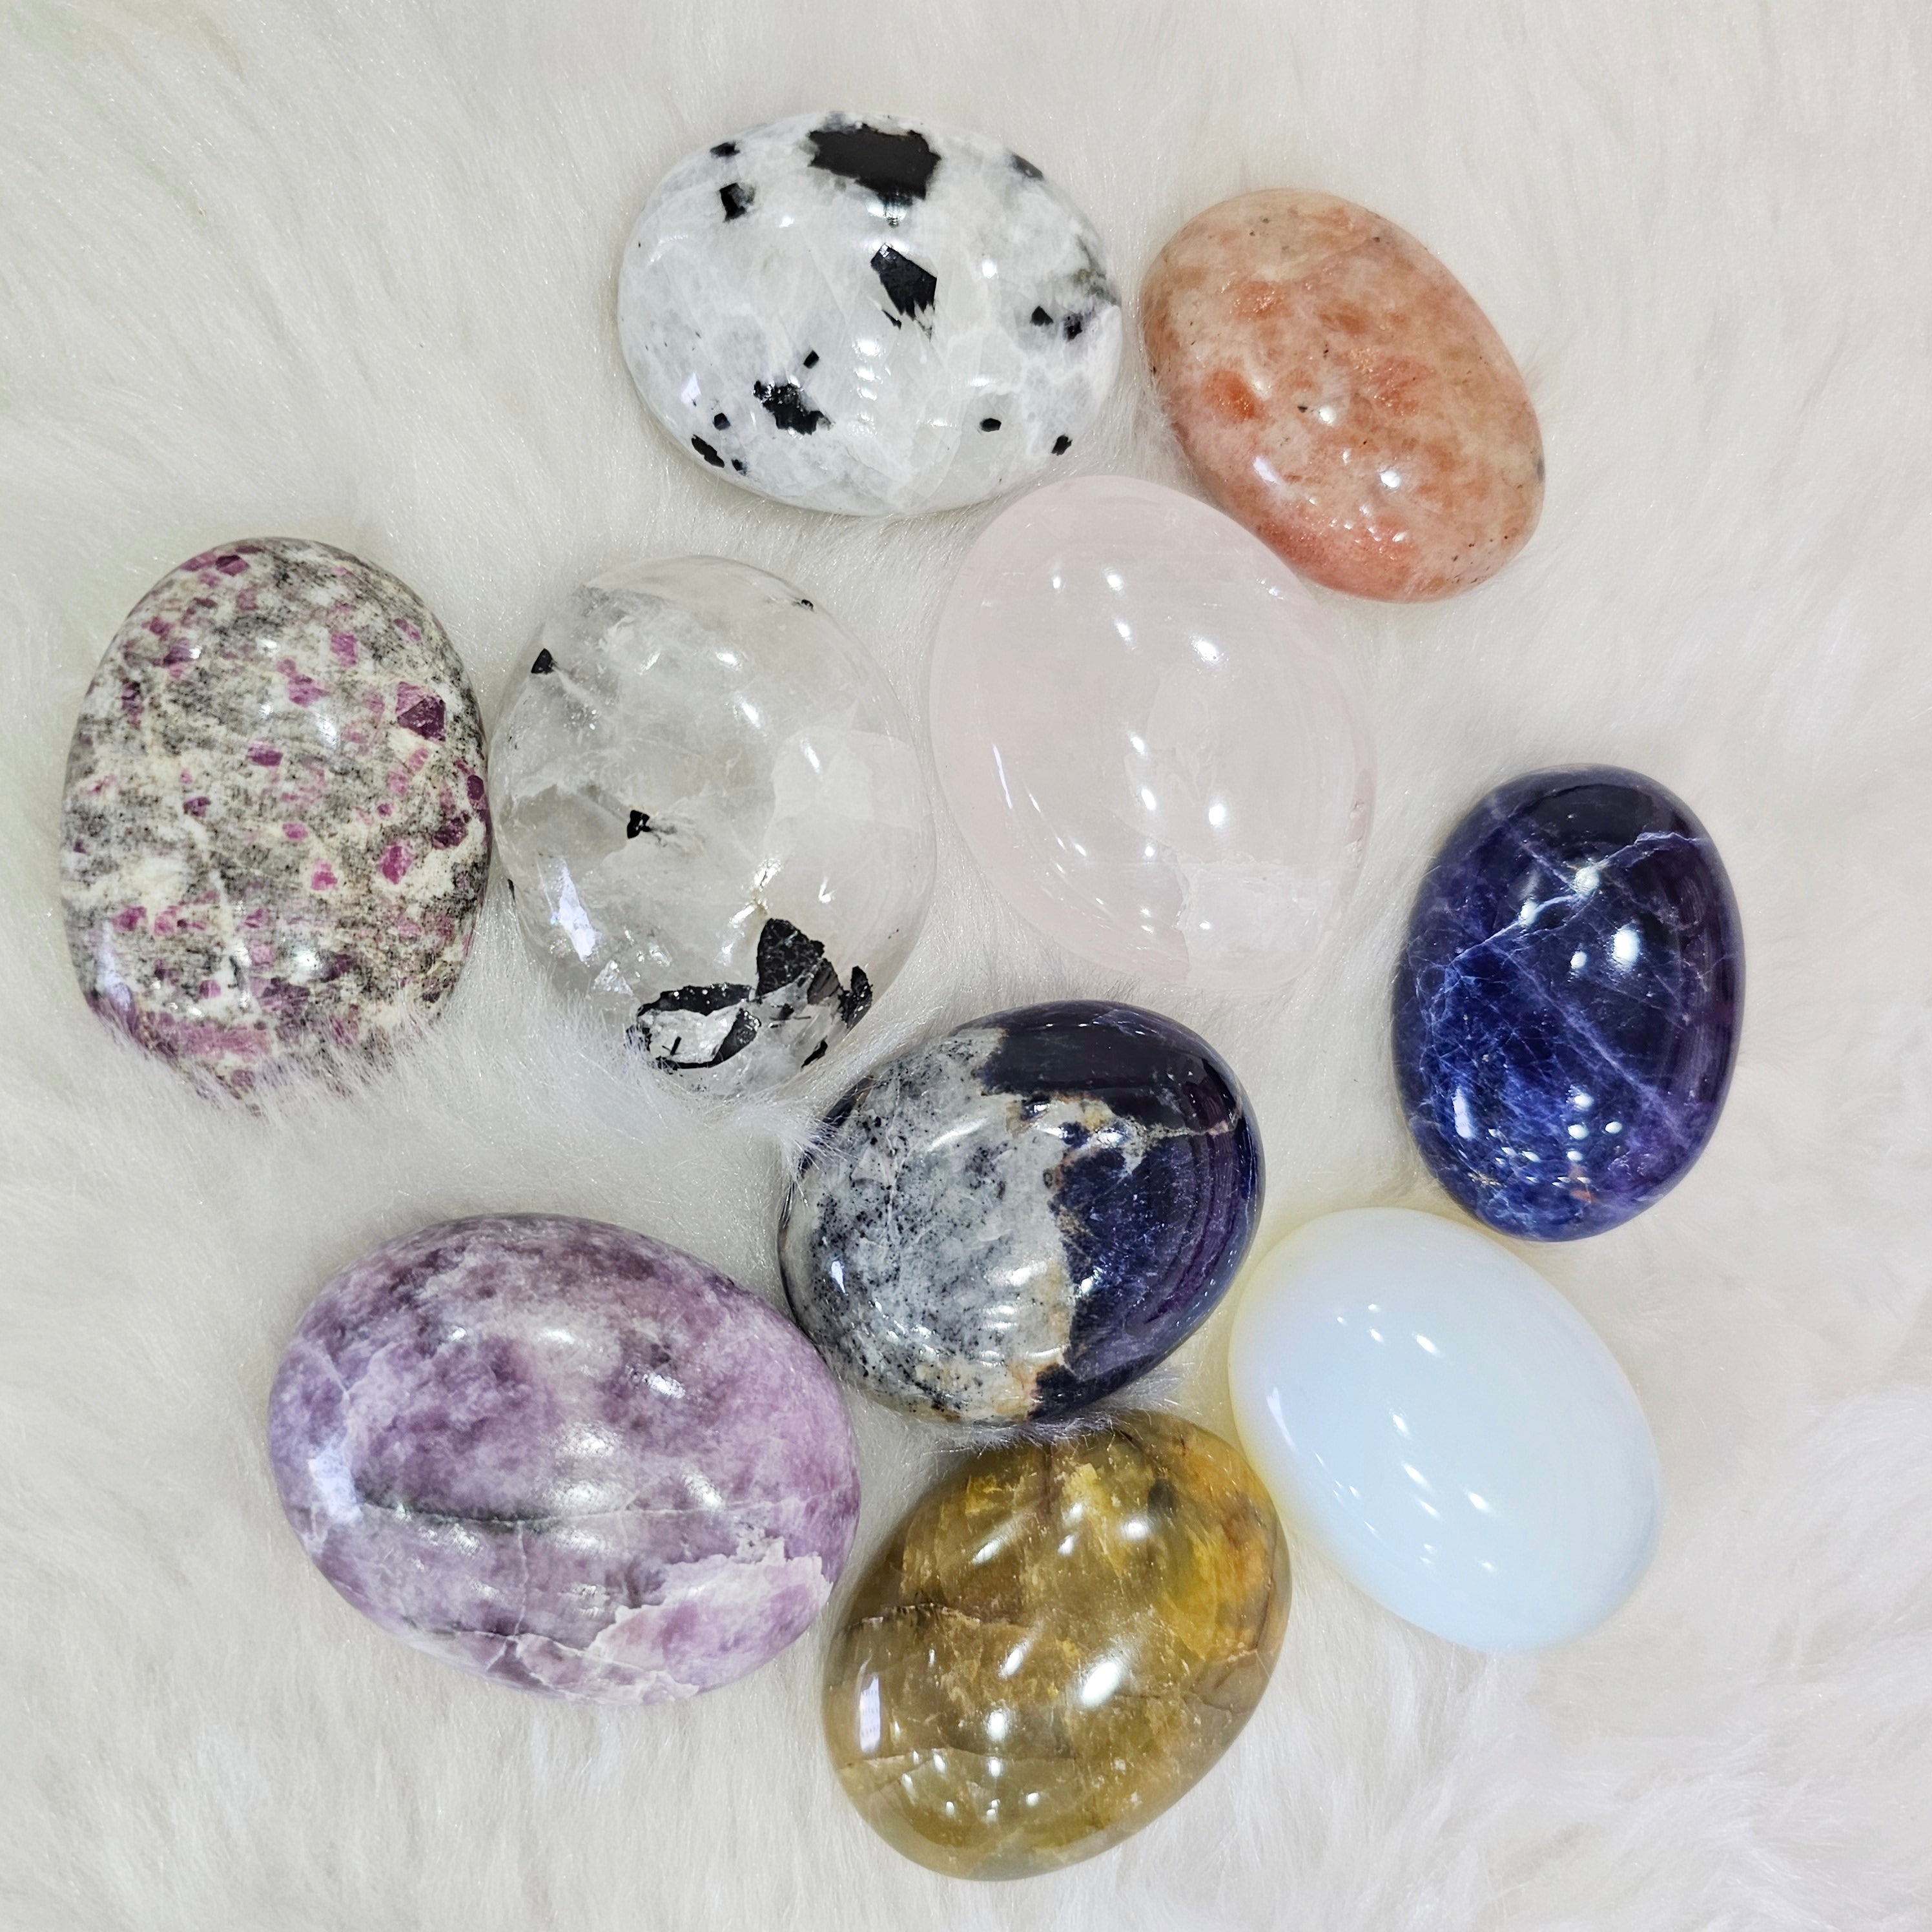 Crystal smooth pebbles | 9 Gems - The LabradoriteKing